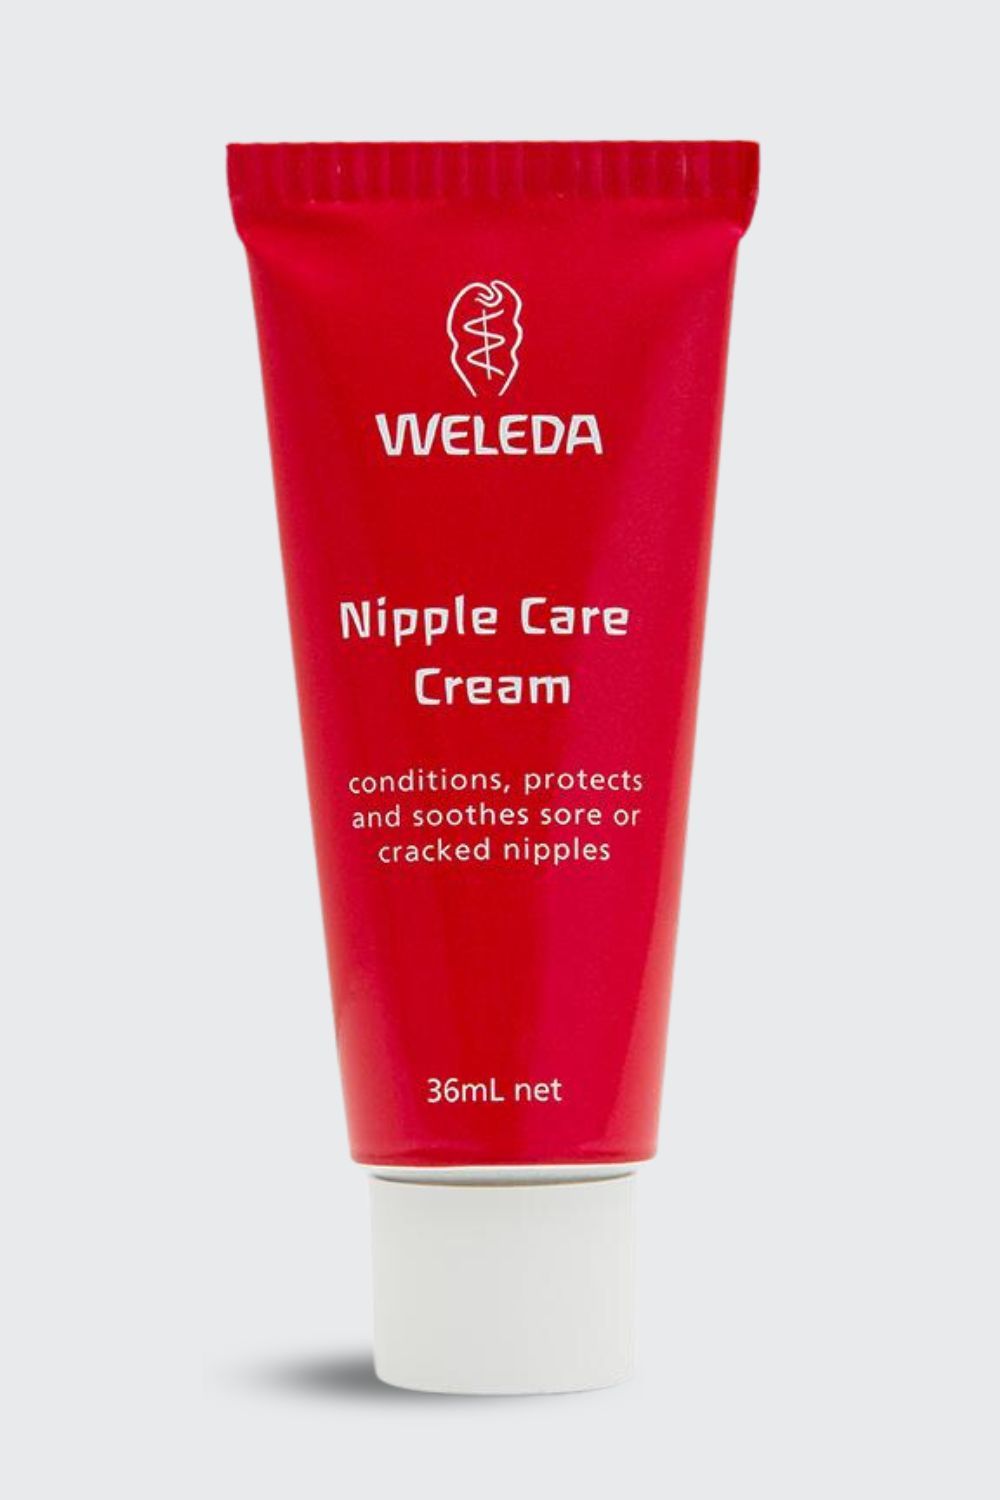 Weleda - Nipple Care Cream - 36ml